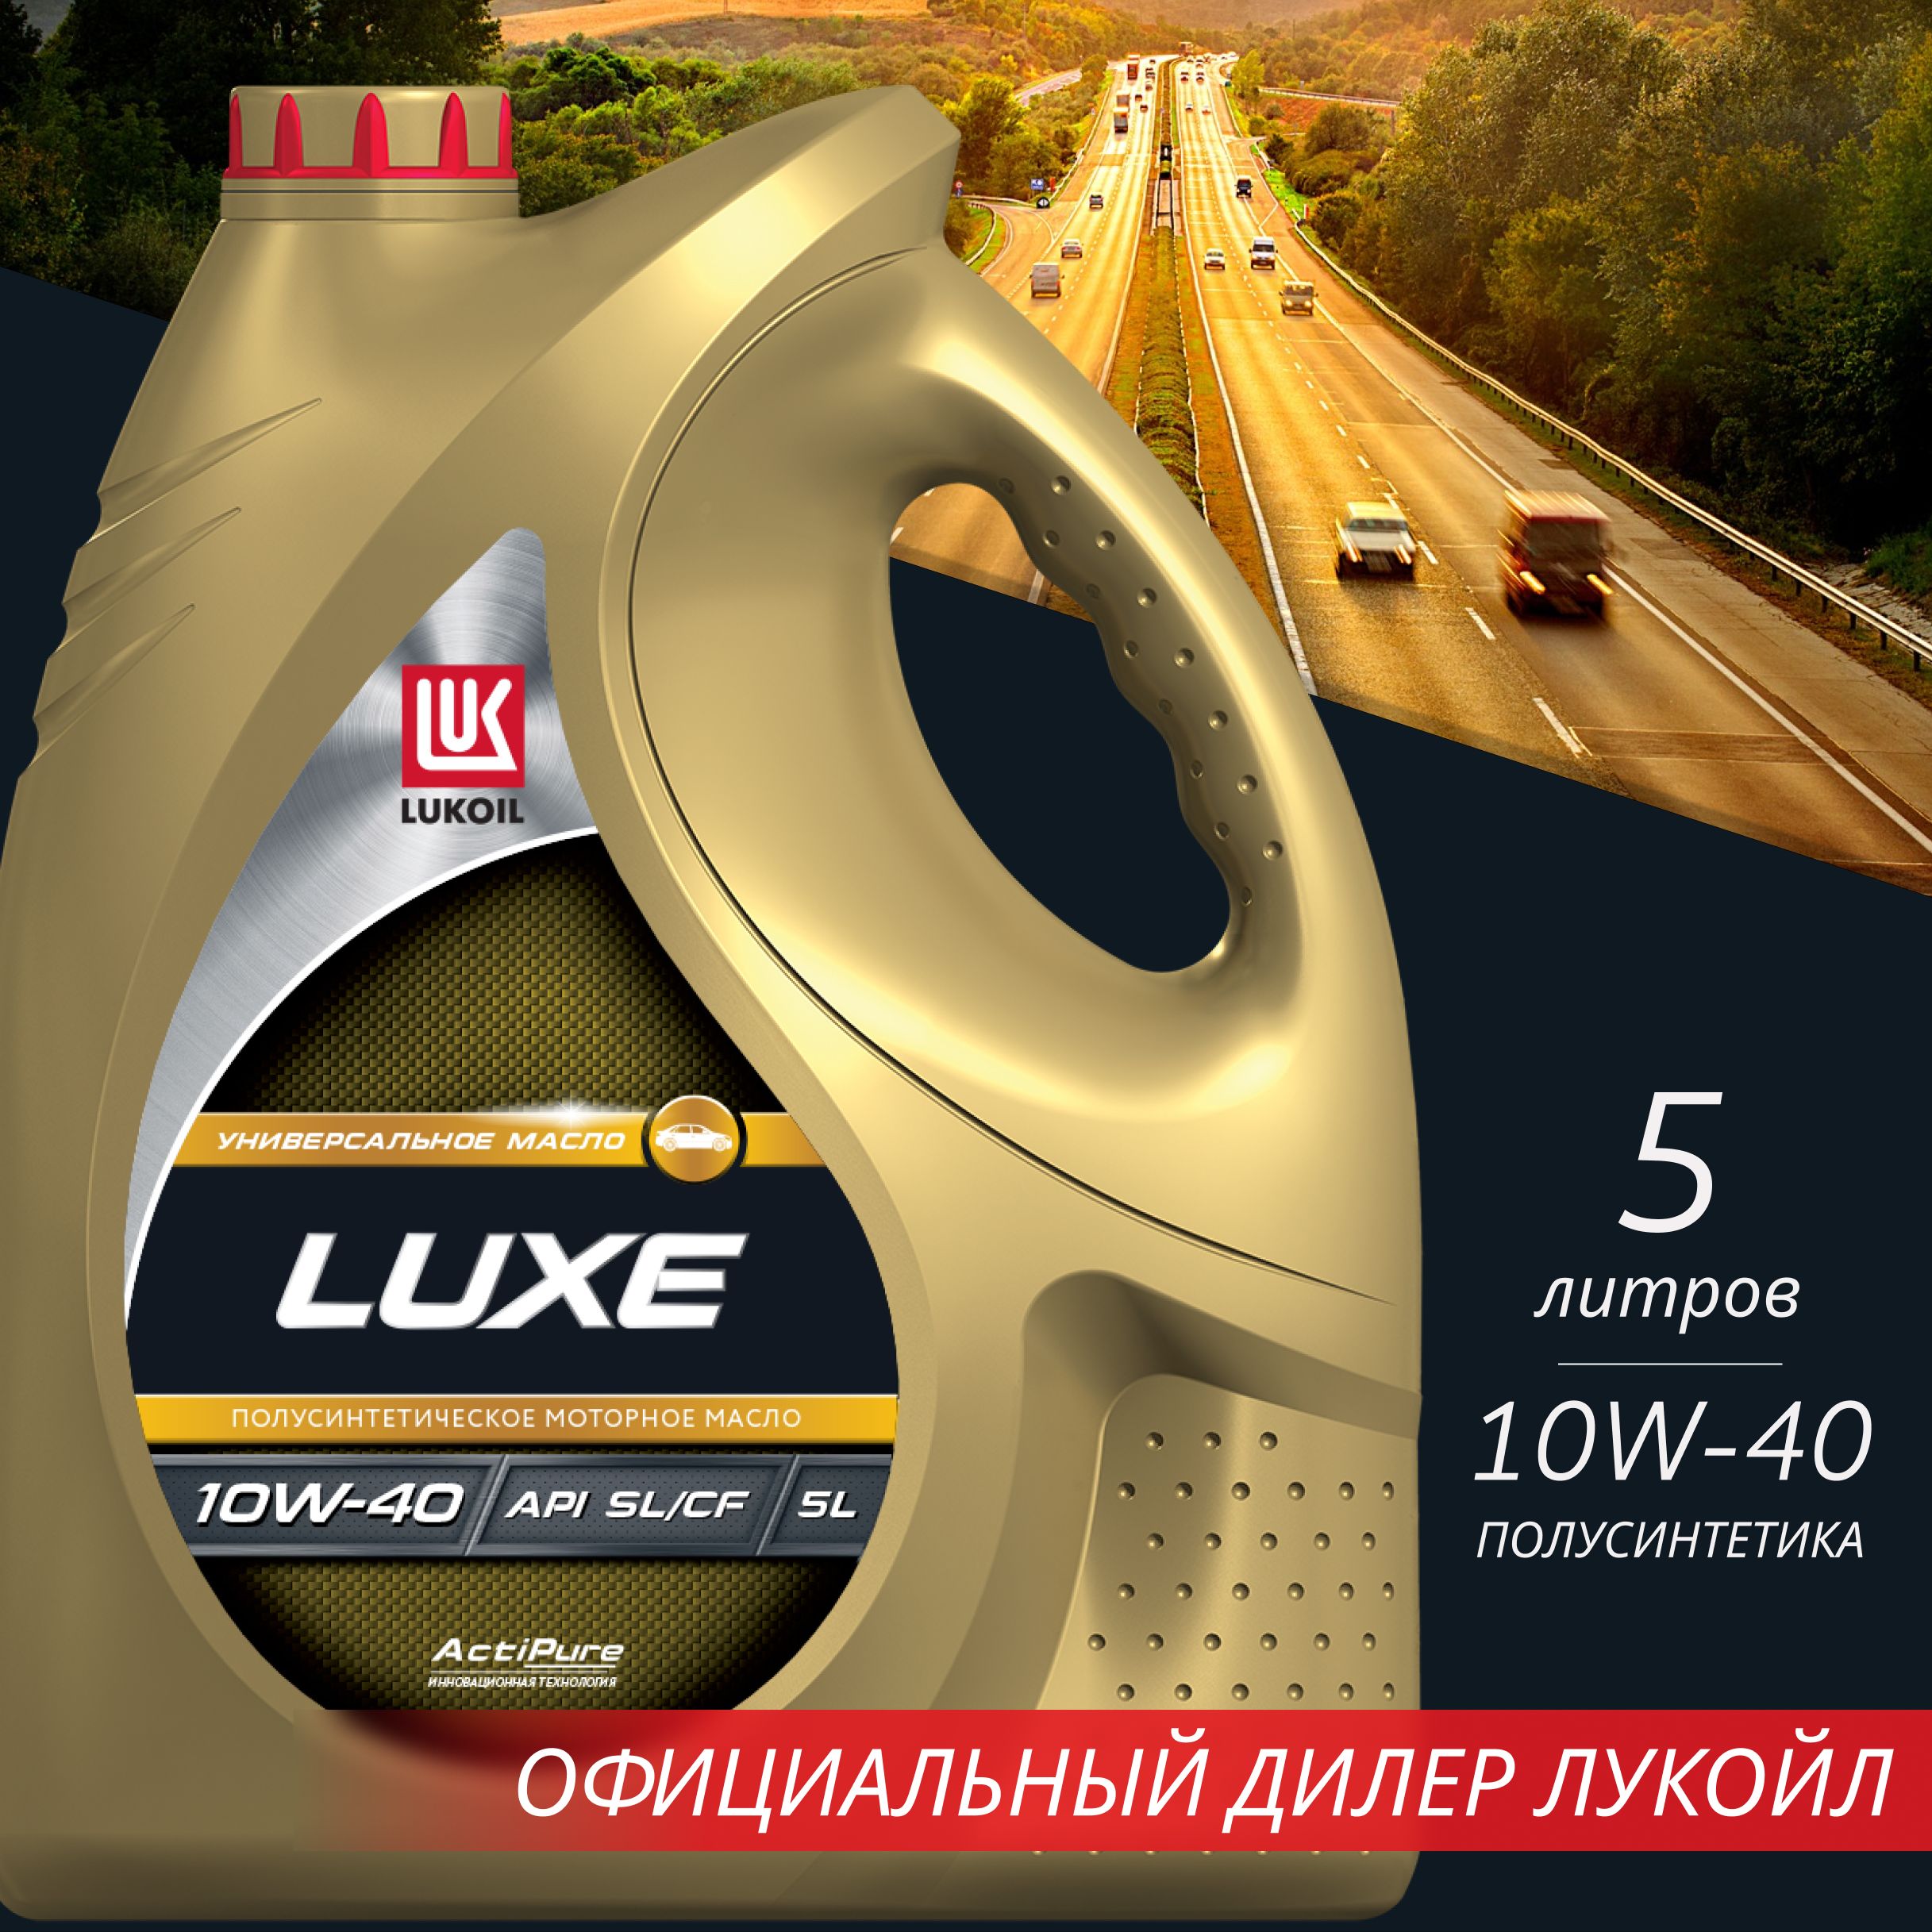 Масло лукойл люкс полусинтетика отзывы. Масло Luxe реклама. Масло Luxe 10w 40 полусинтетика отзывы.